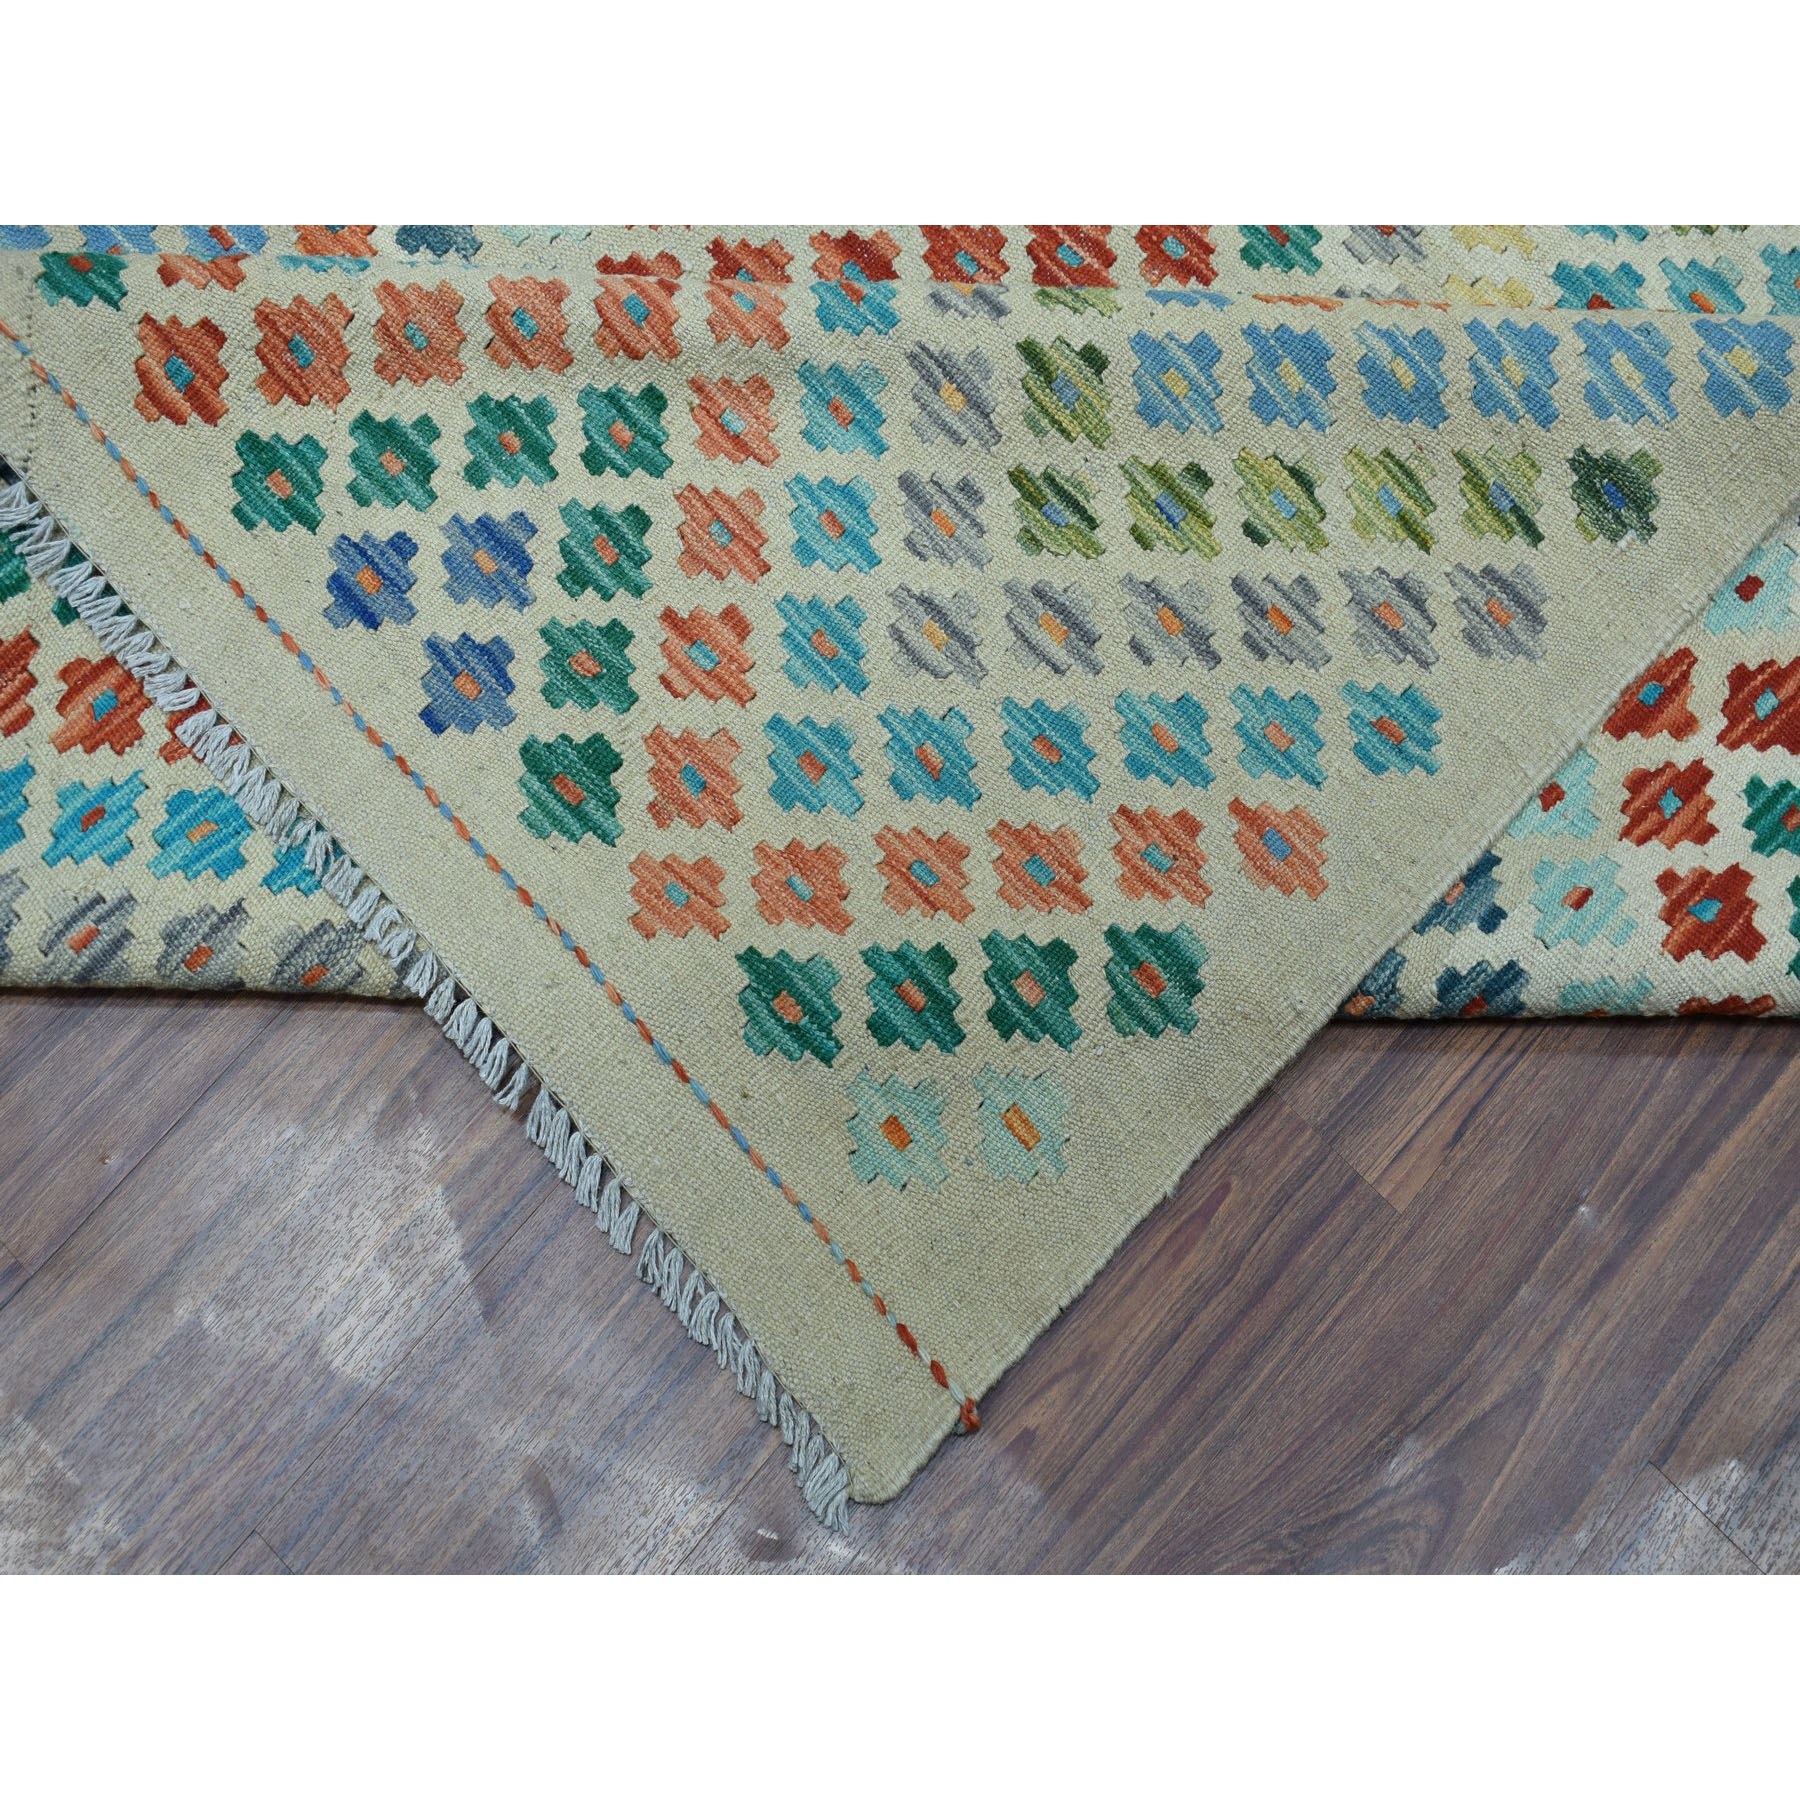 10-5 x13- Colorful Afghan Kilim Pure Wool Hand Woven Oriental Rug 